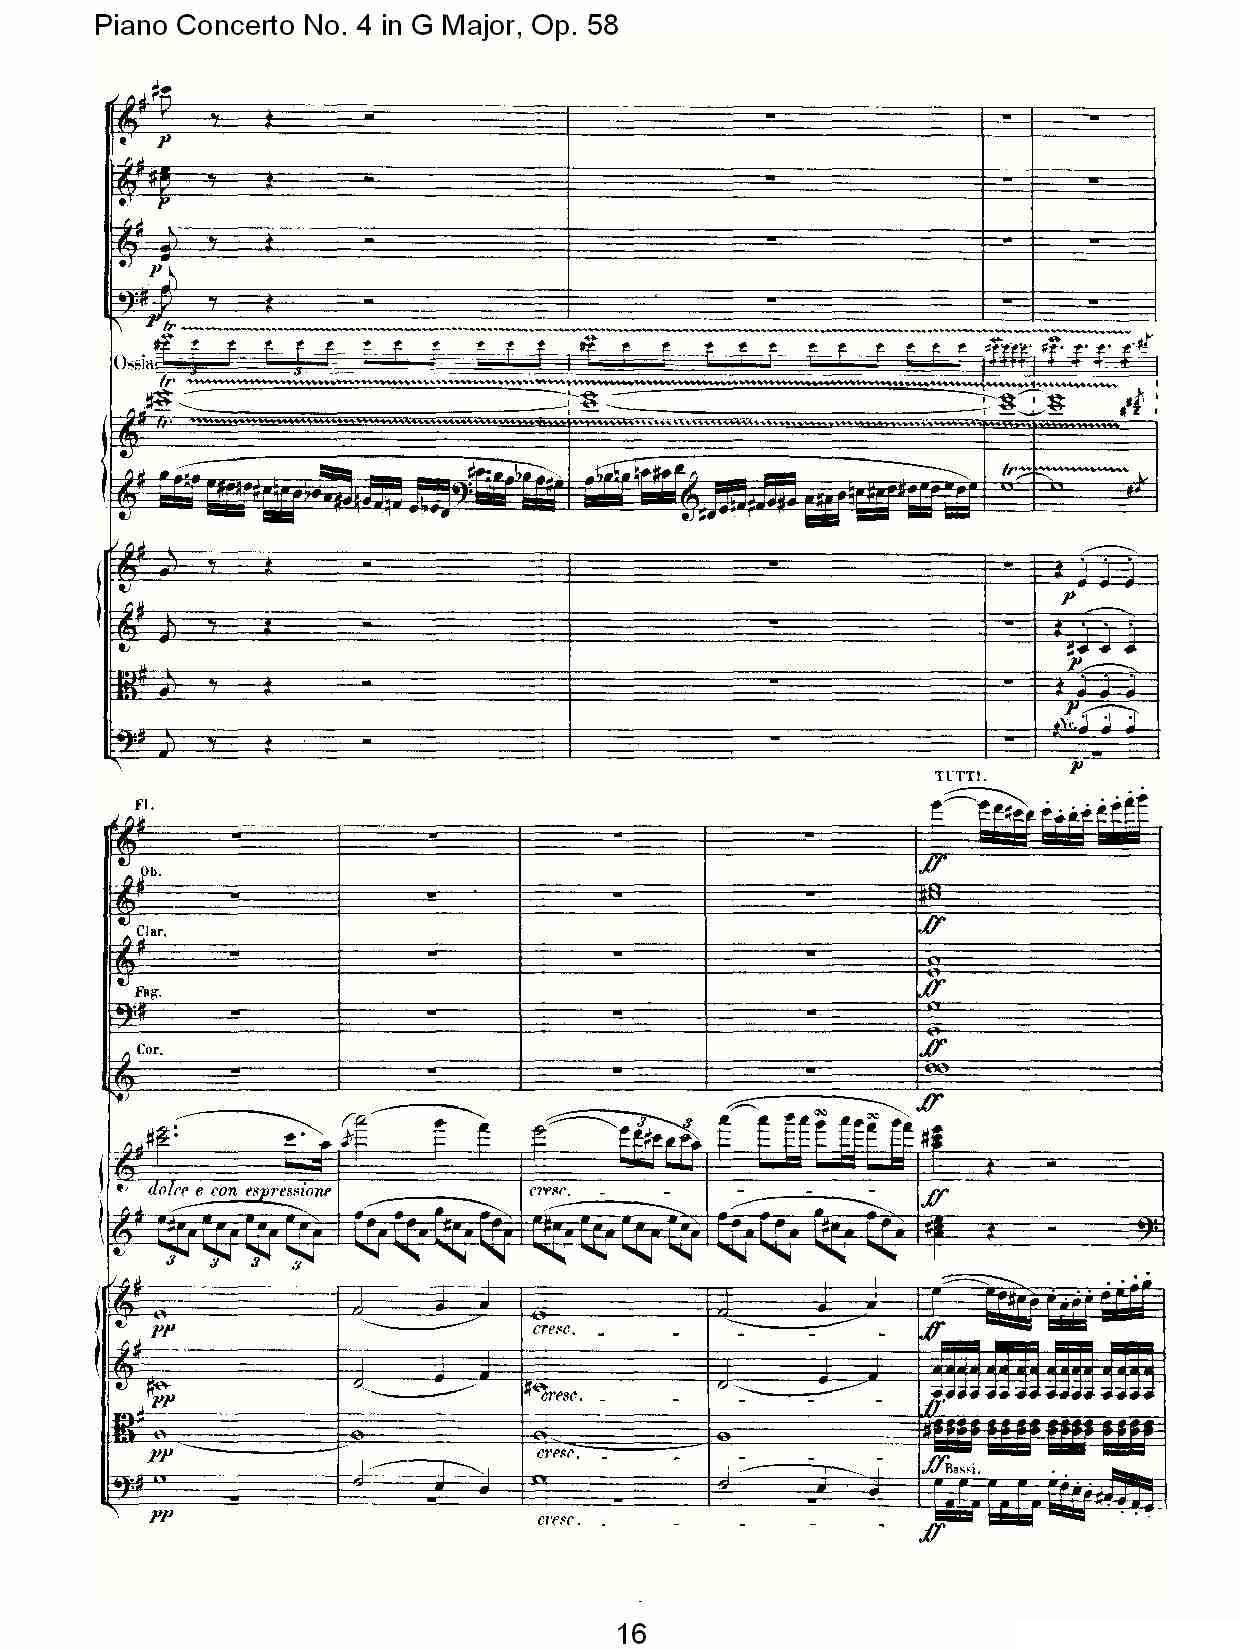 Ｇ大调钢琴第四协奏曲 Op.58 第一乐章钢琴曲谱（图16）